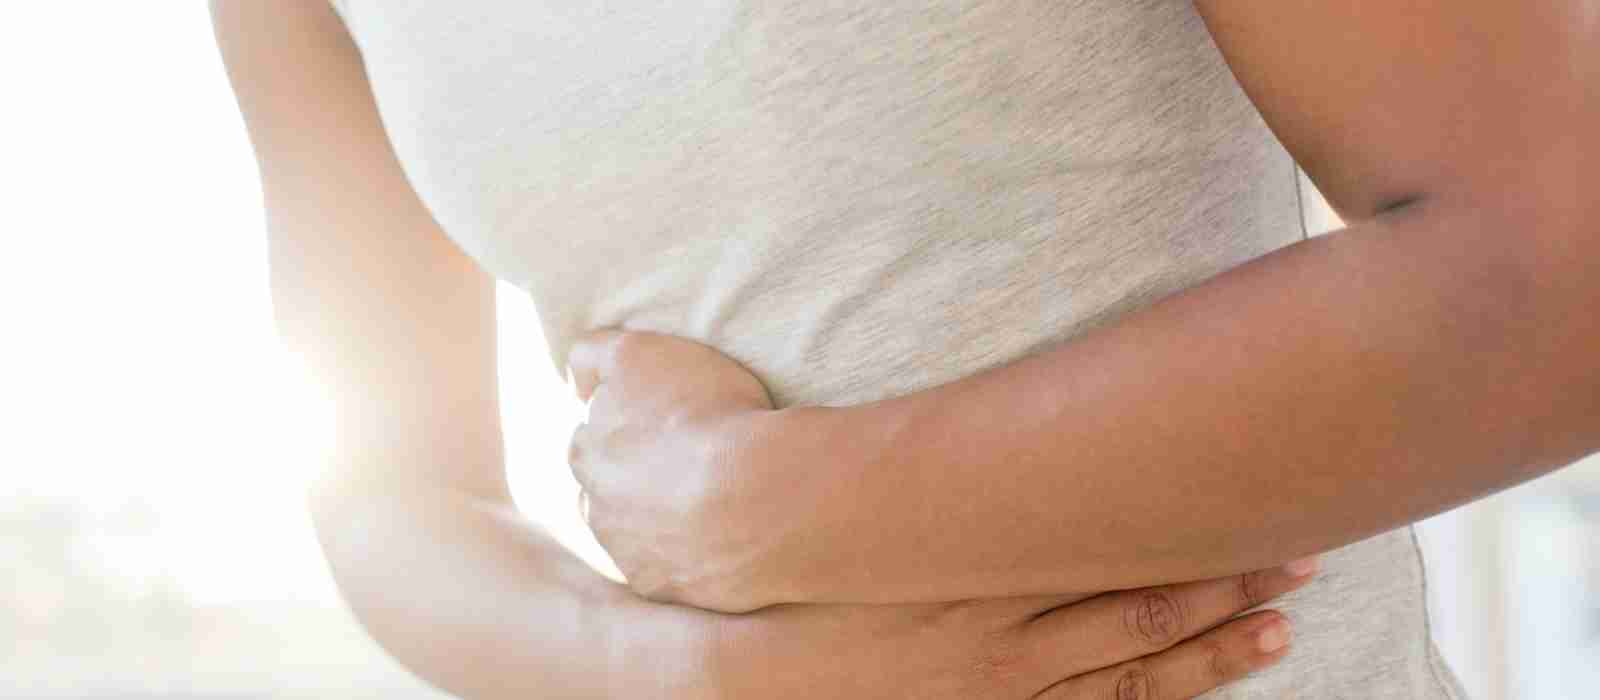 Can I Take Benefiber While Breastfeeding